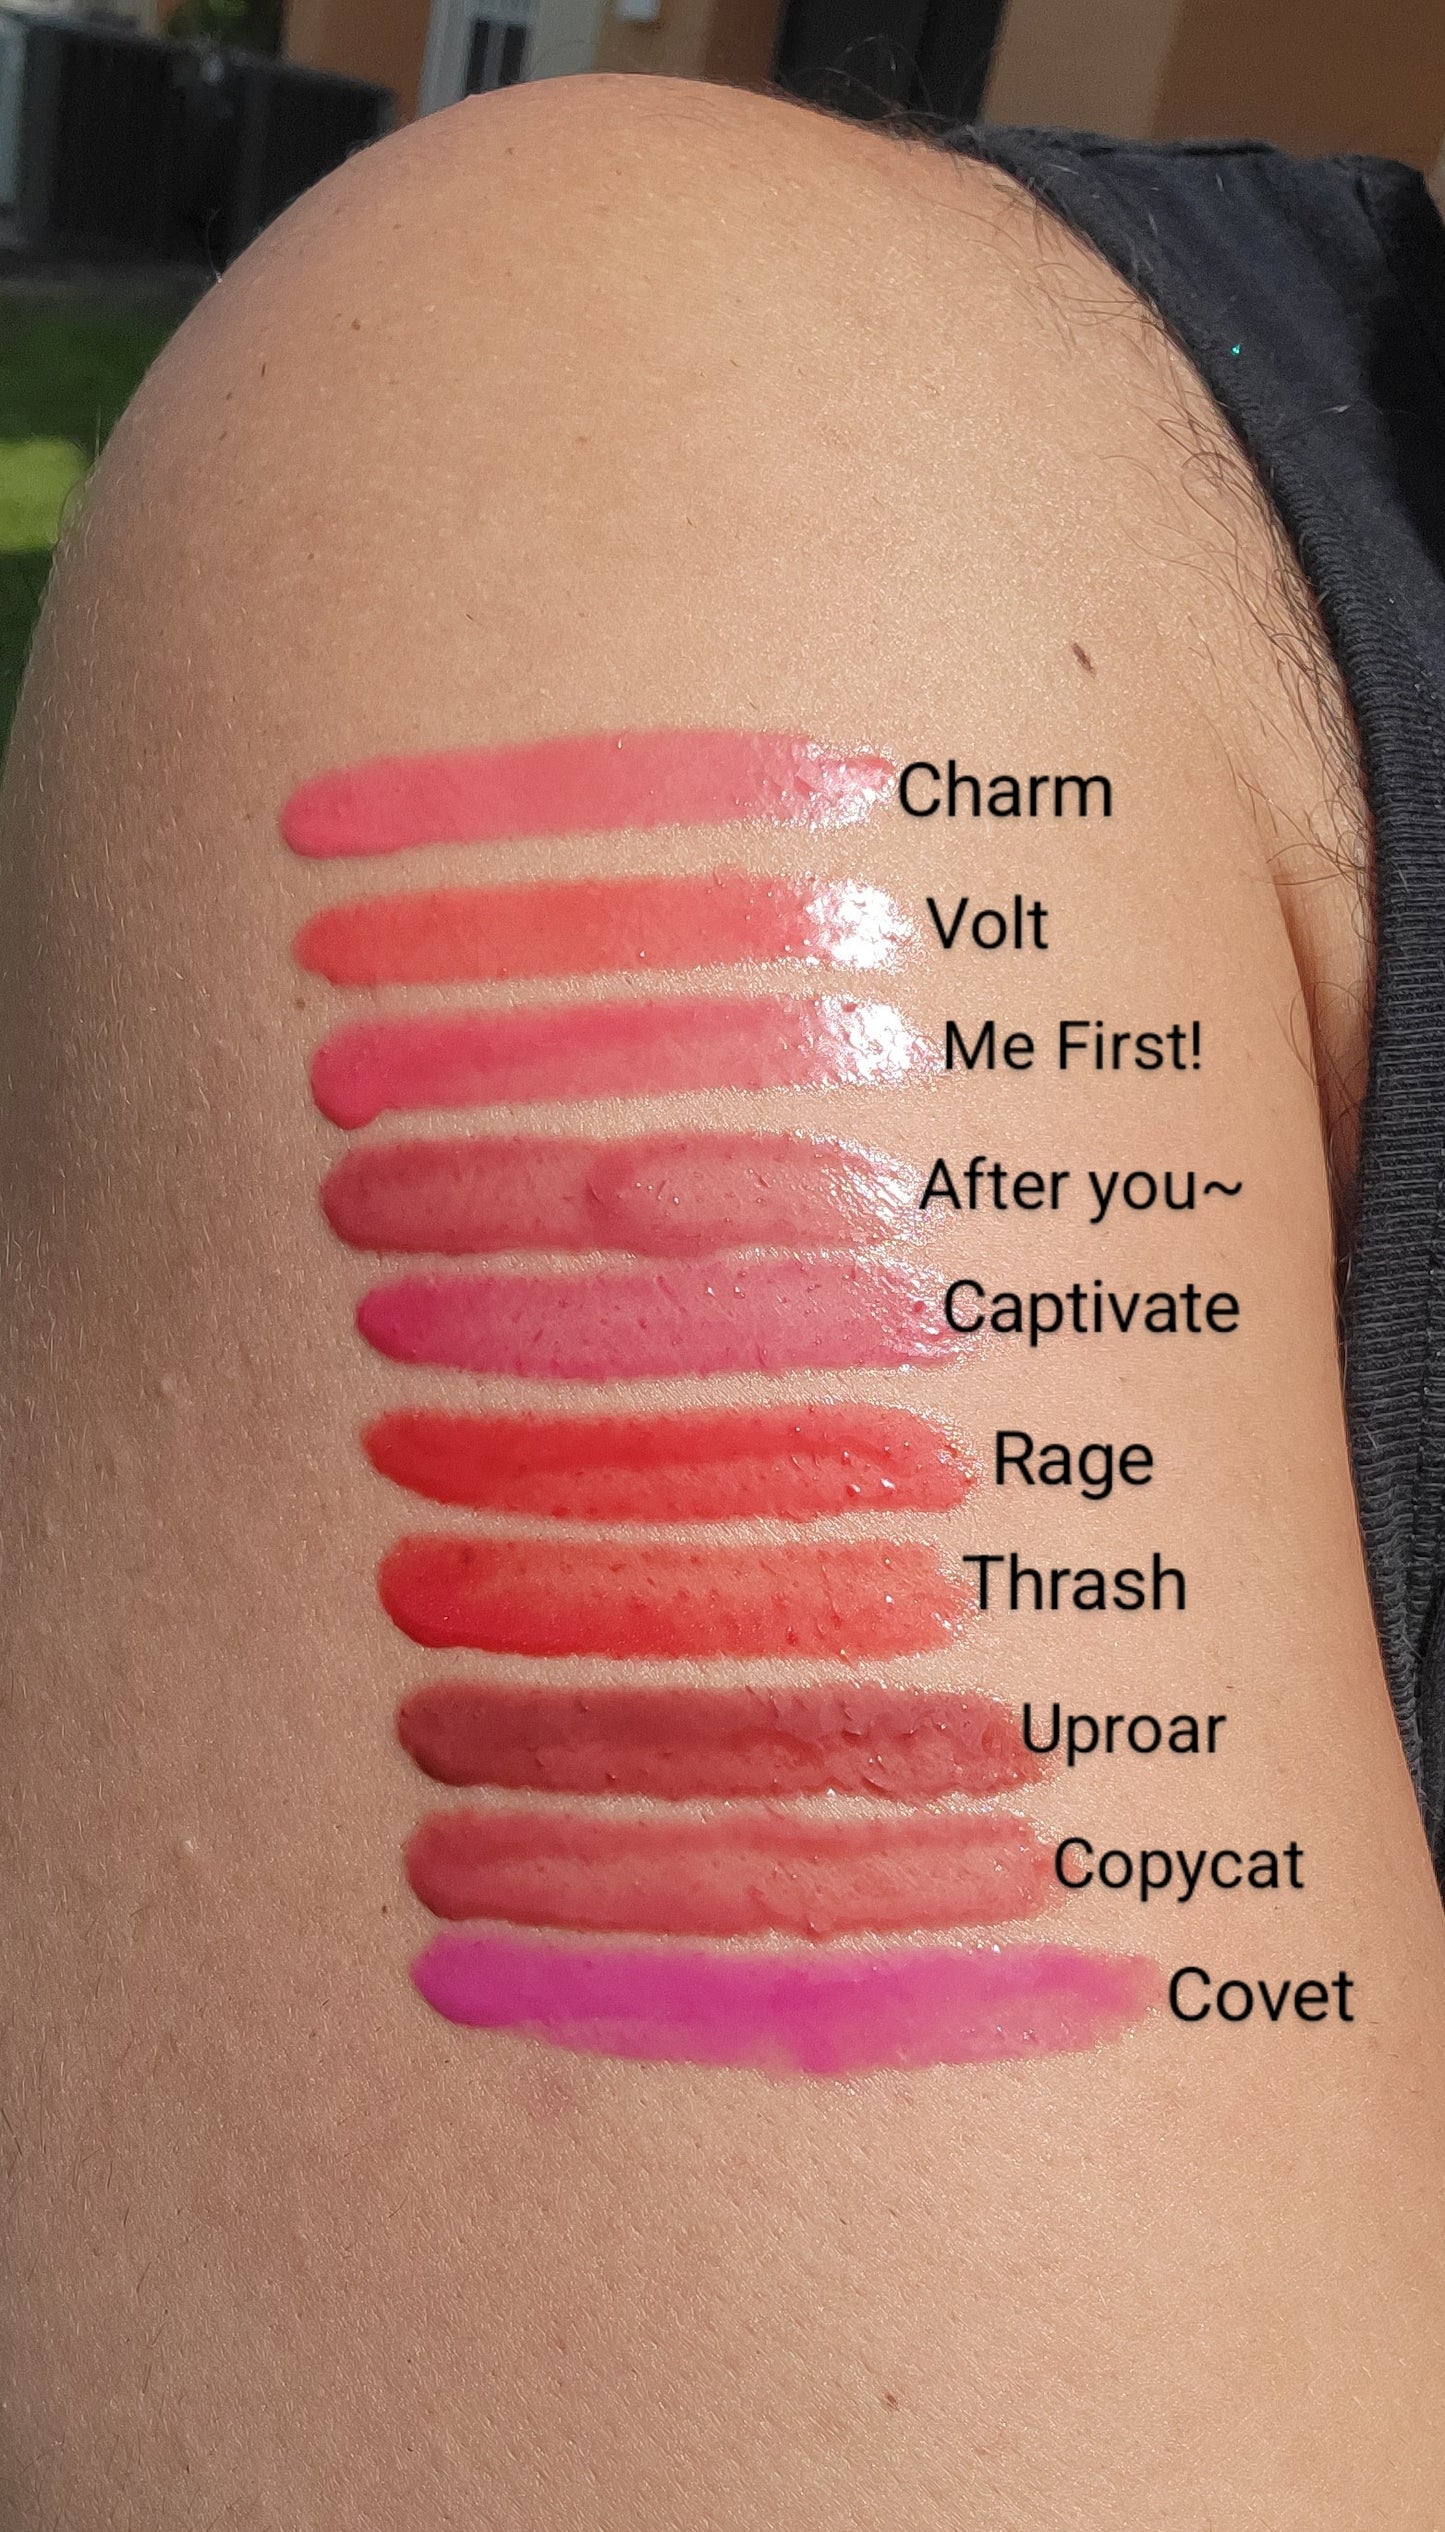 After you~ - Lip Cream Reddish Pink